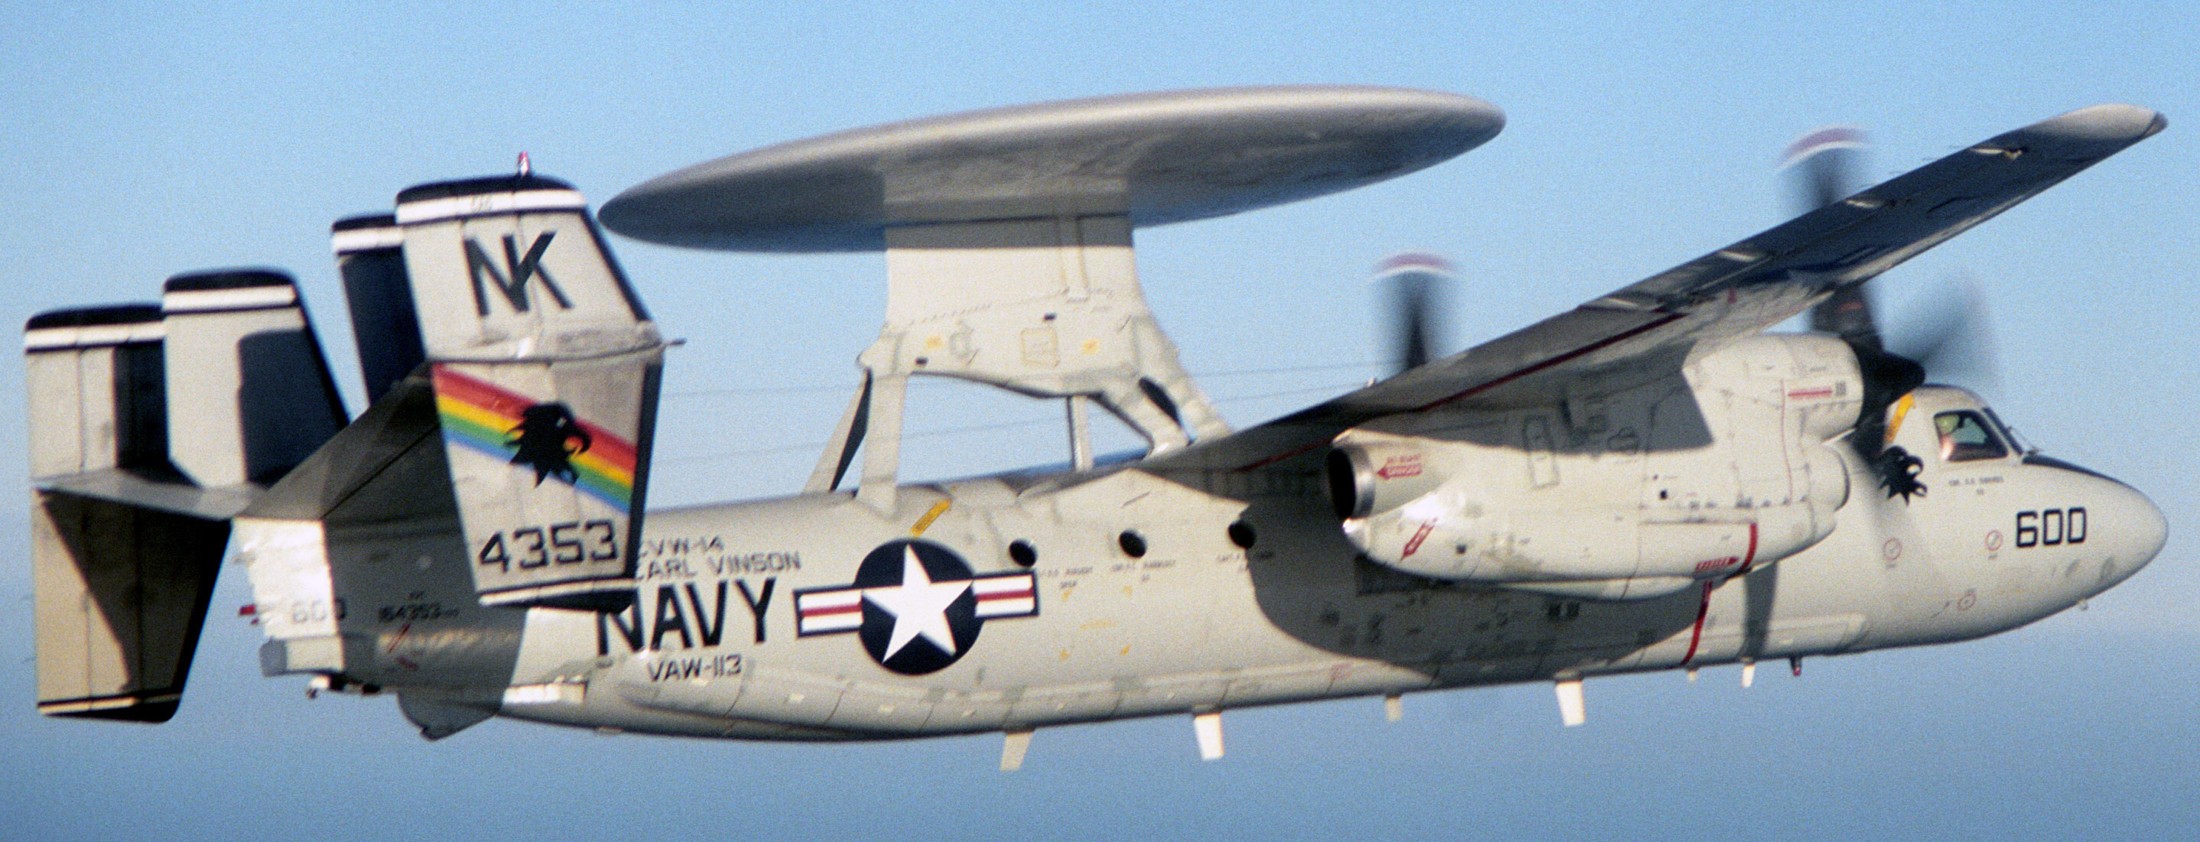 vaw-113 black eagles carrier airborne early warning squadron us navy grumman e-2c hawkeye cvw-14 uss carl vinson cvn-70 82 persian gulf